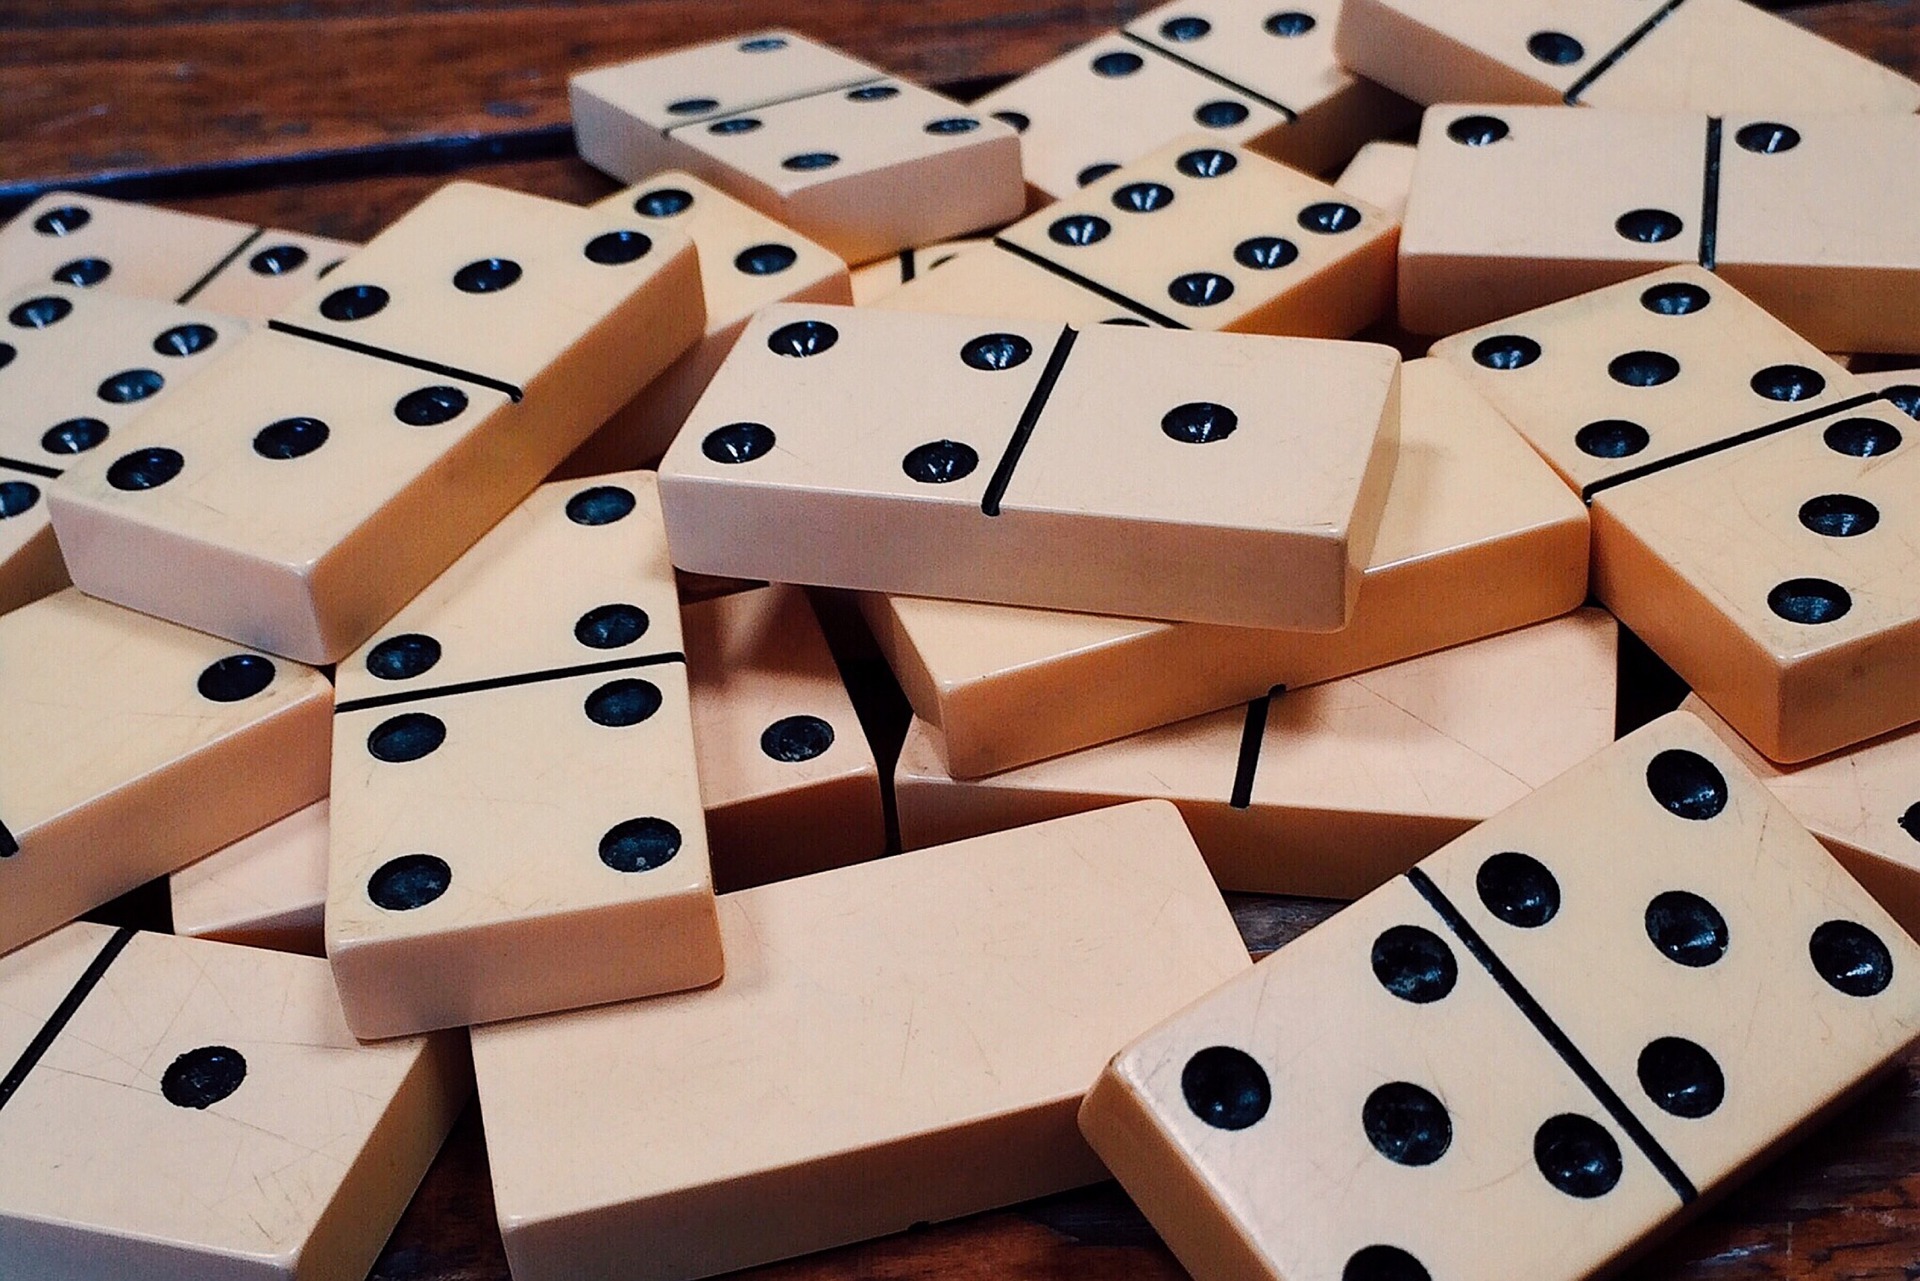 play dominoes game